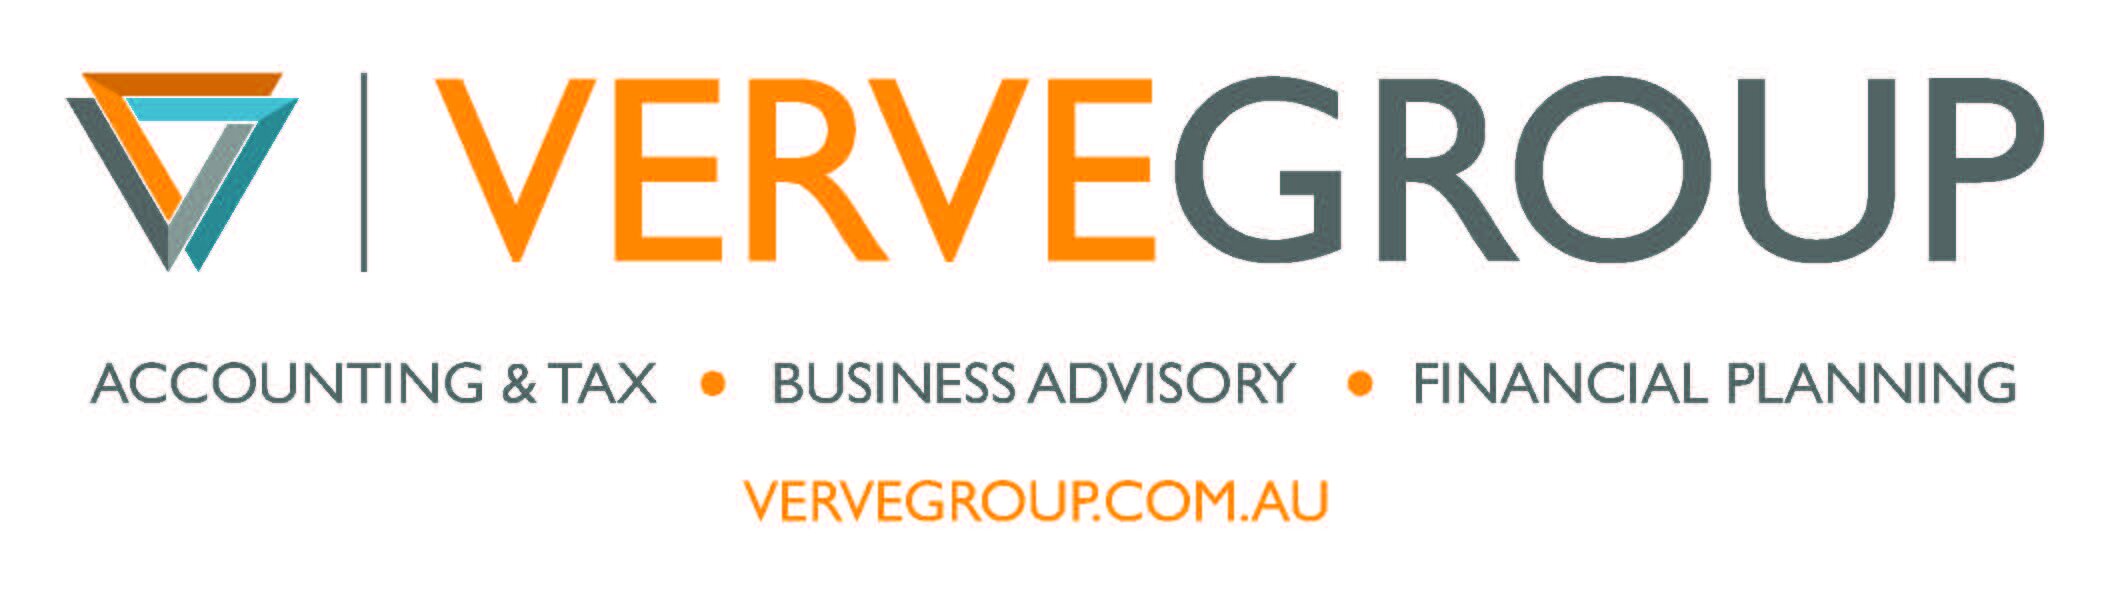 Verve Group Logo (landscape tagline advisory with website 21pt.jpg